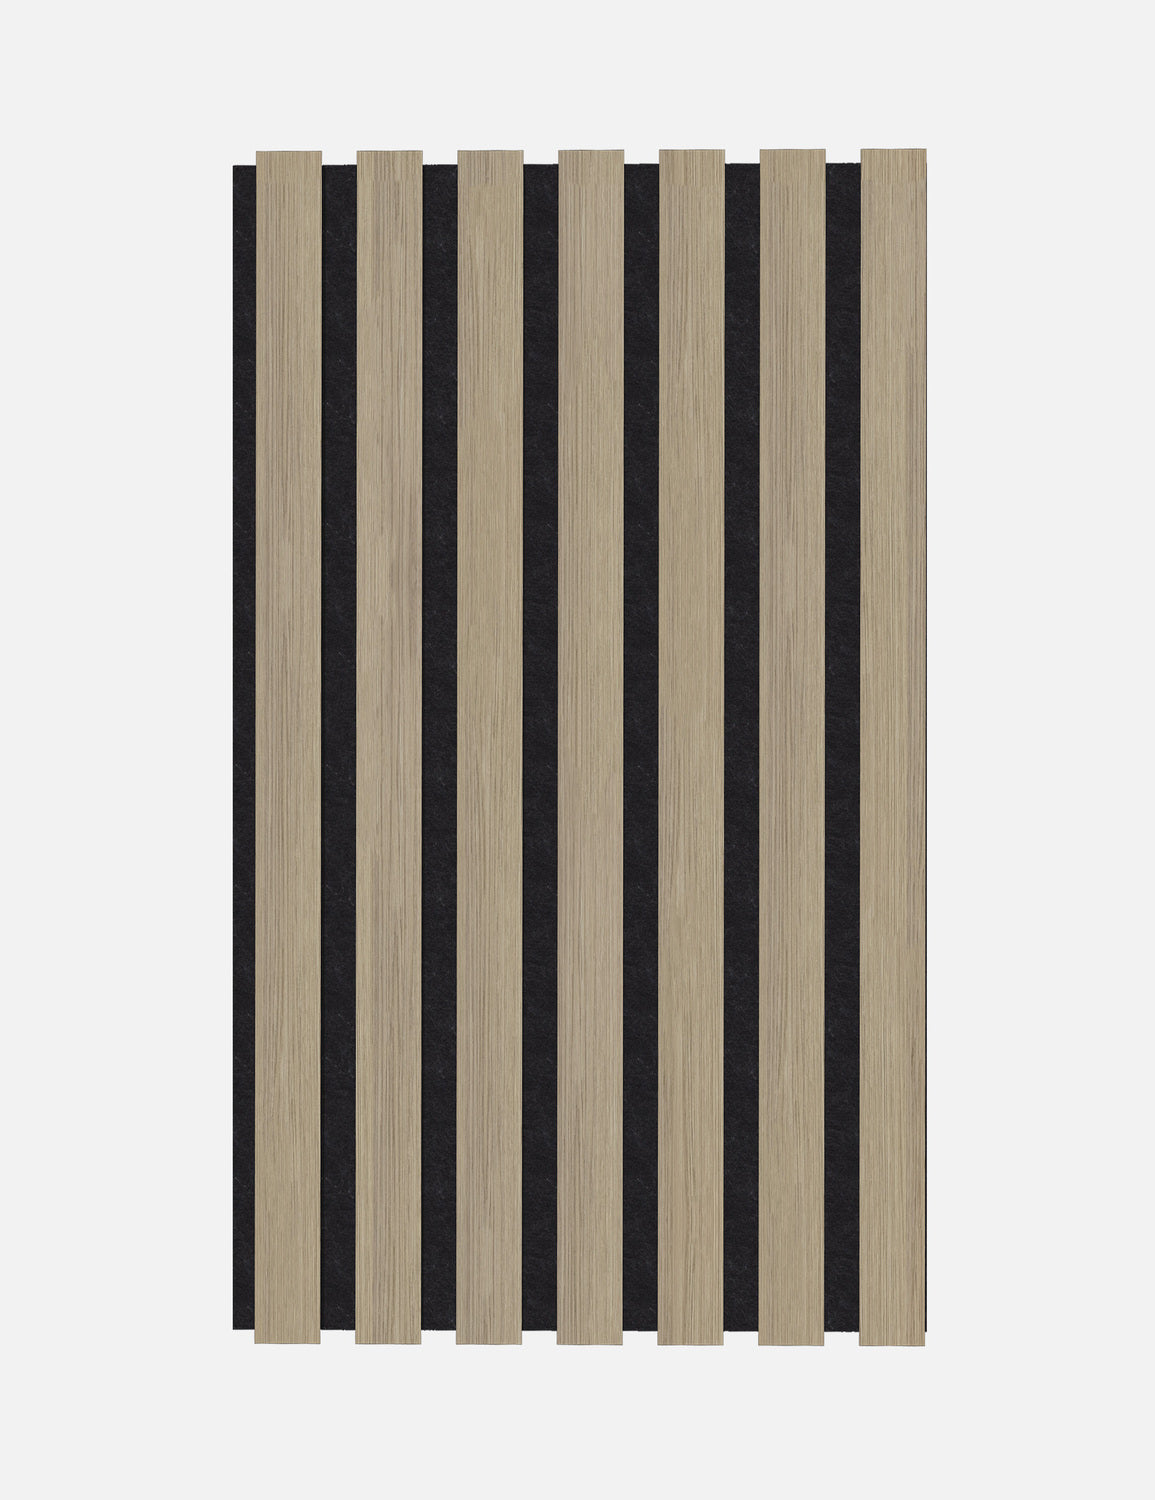 Muster Eiche Grau Trendig - 20x12x1,6cm